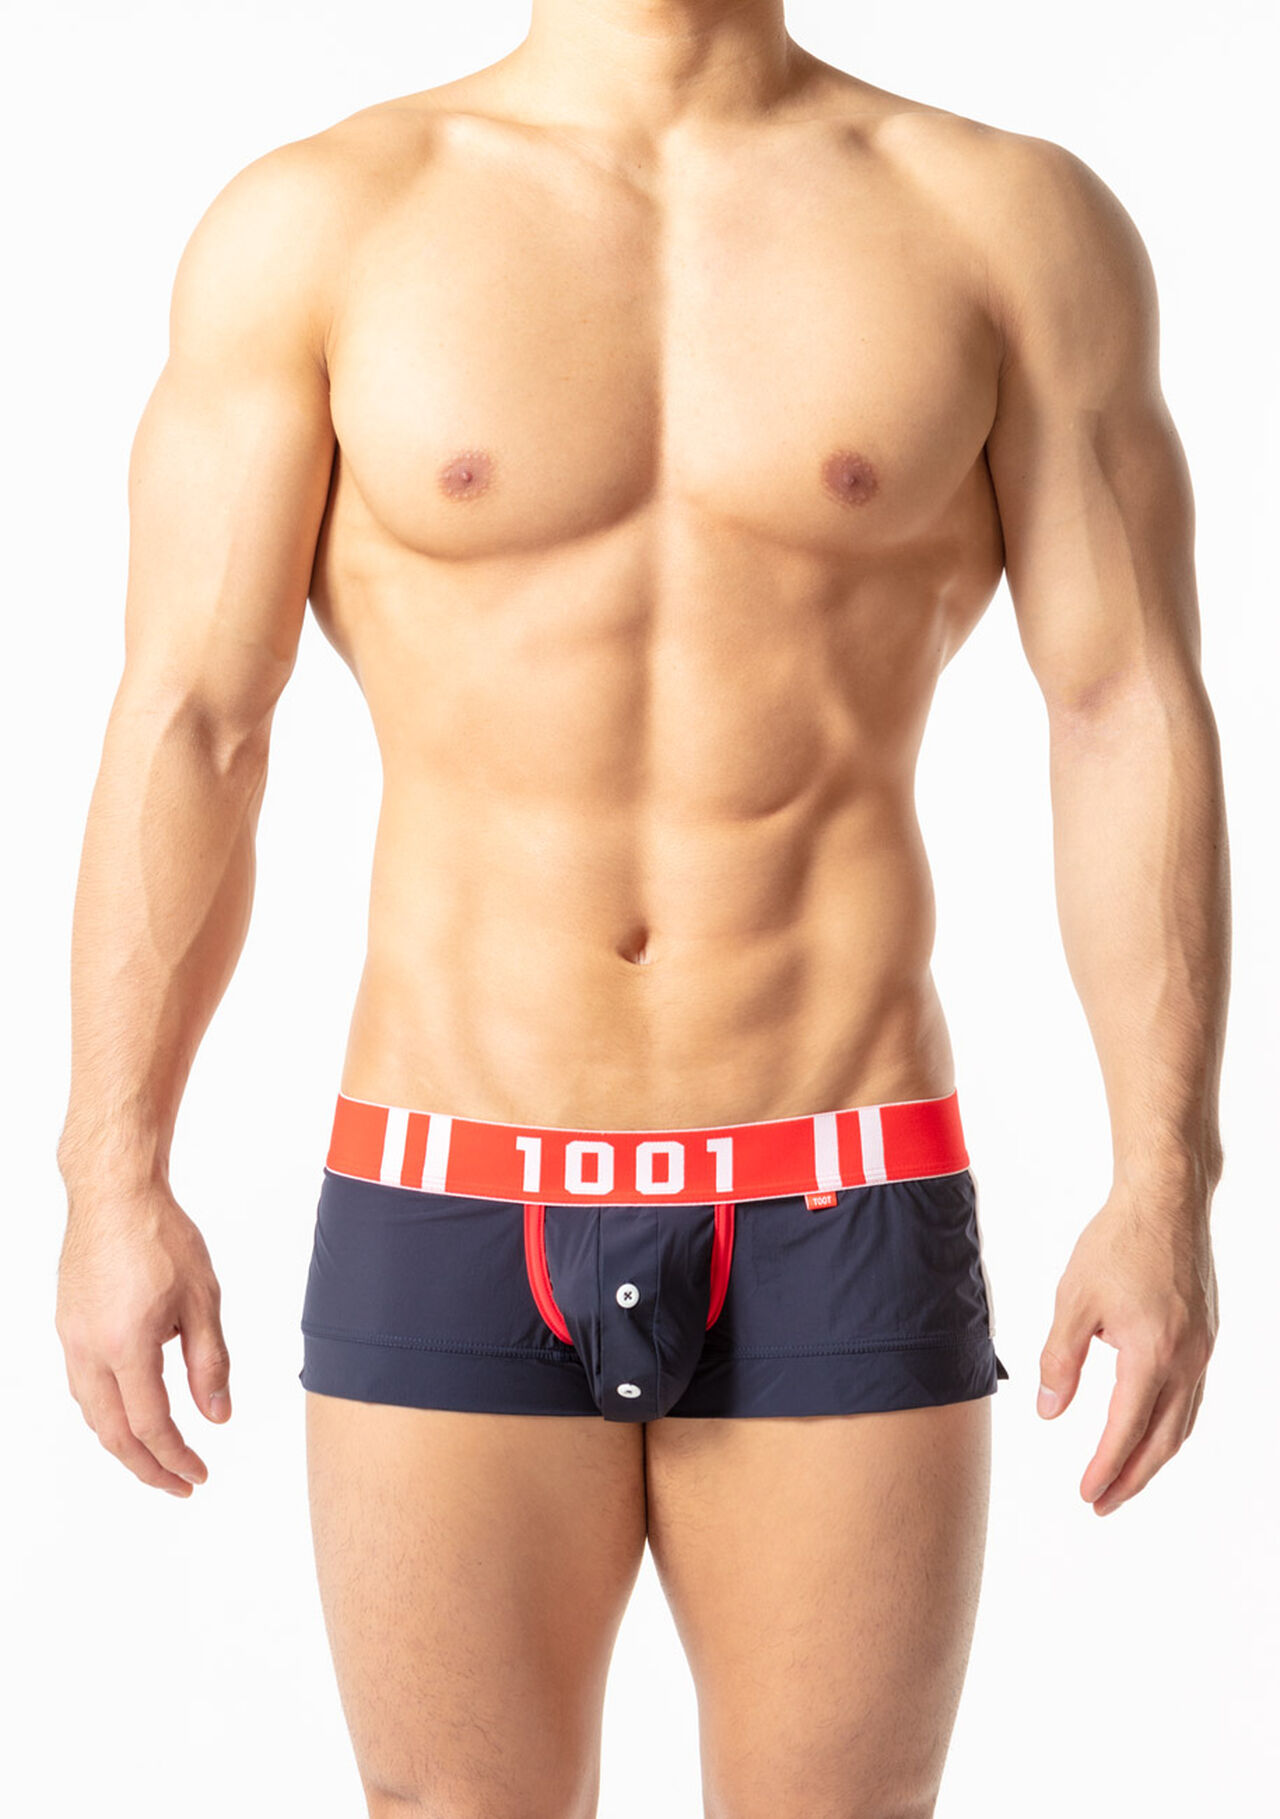 Knit Jersey Trunks  Men's Underwear brand TOOT official website